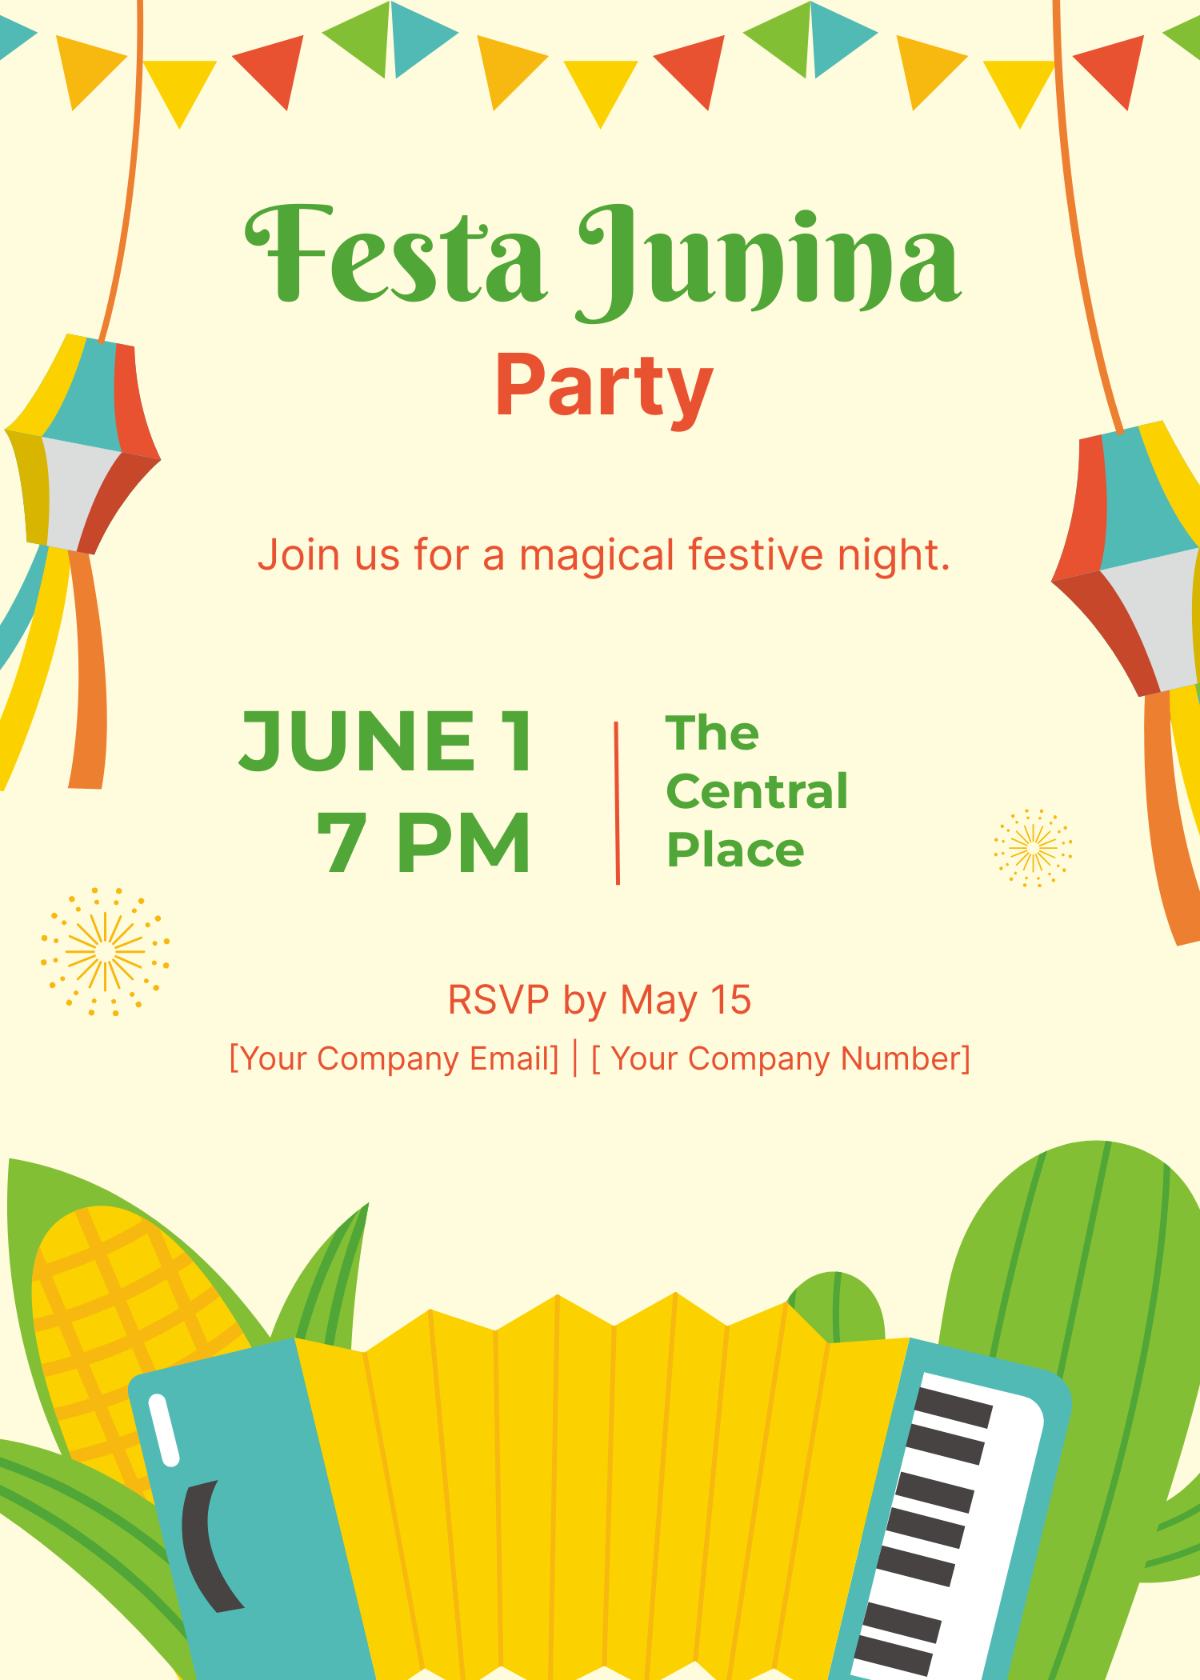 Free Festa Junina Party Invitation Template